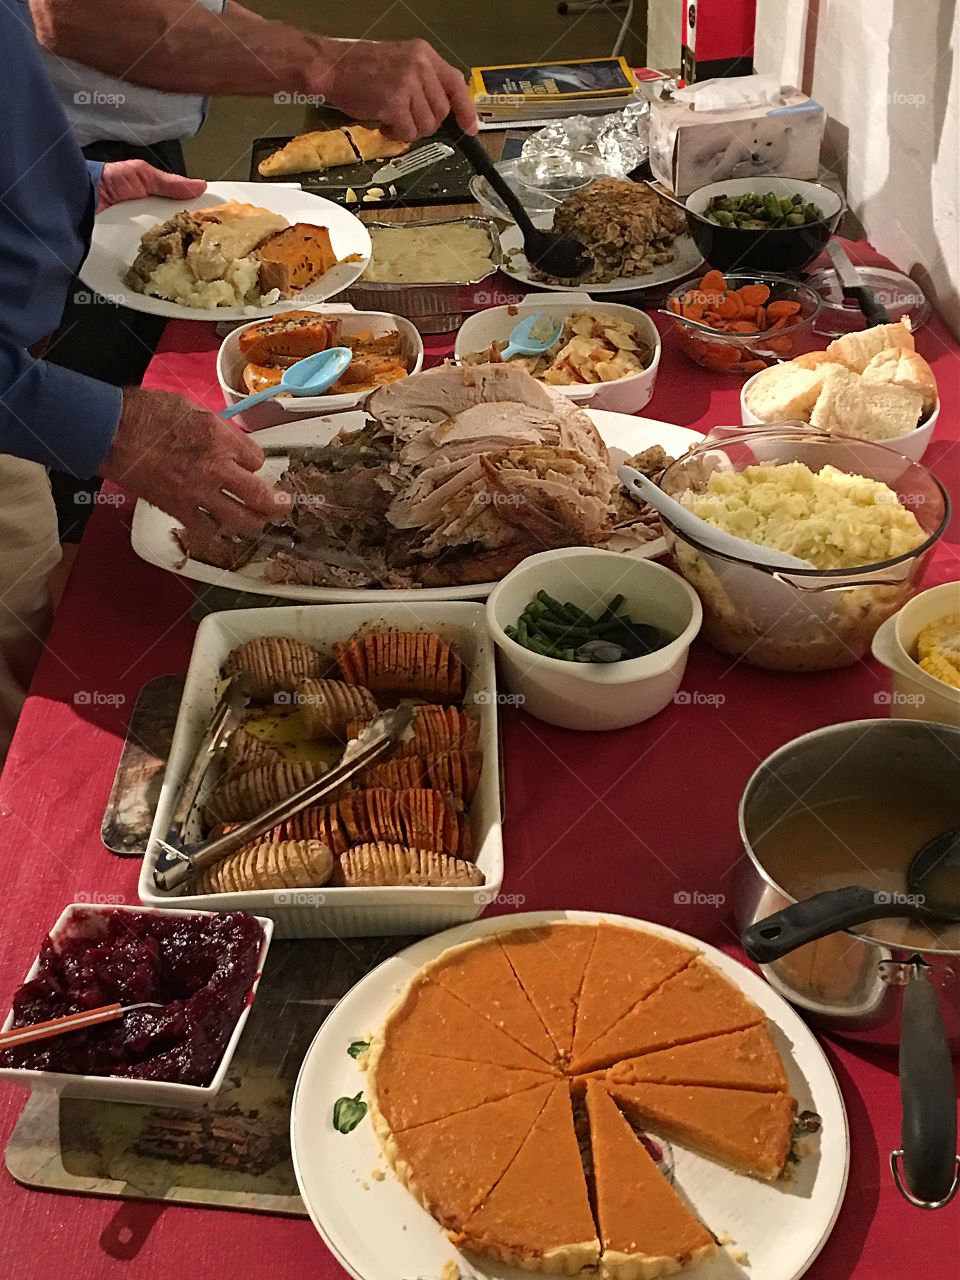 A Thanksgiving feast! Buffet style 